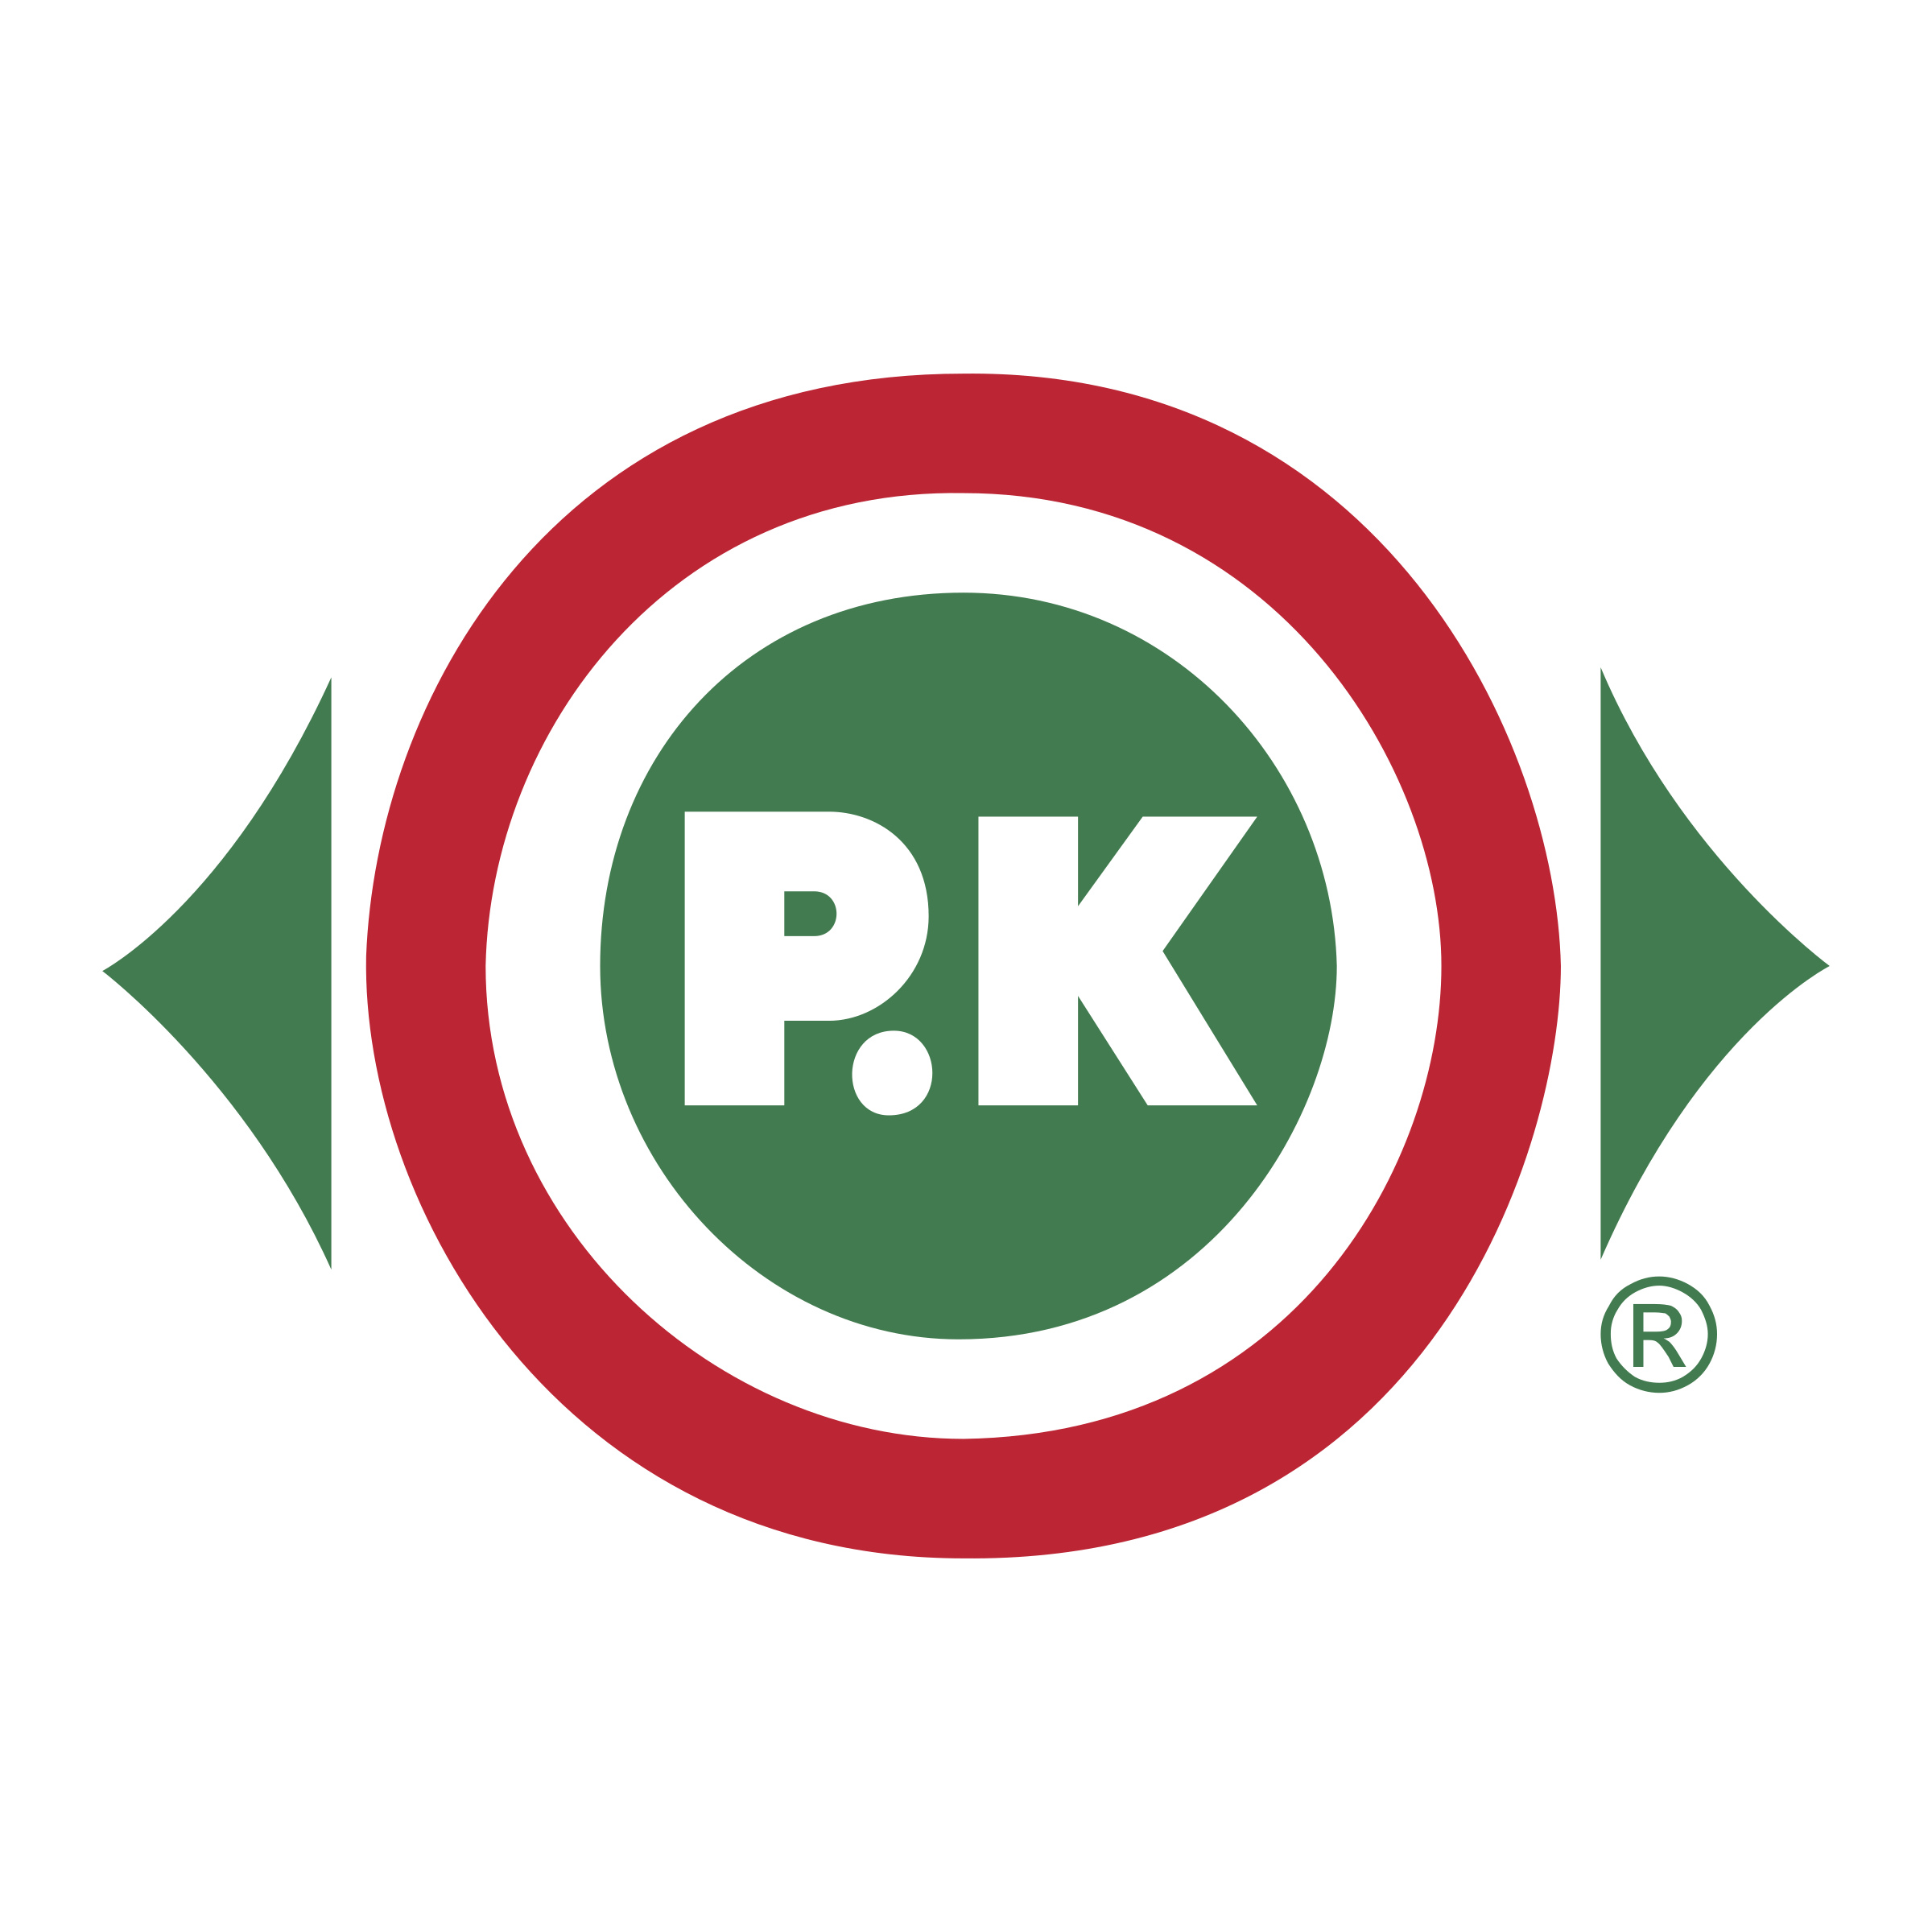 PK Logo - P K Logo PNG Transparent & SVG Vector - Freebie Supply